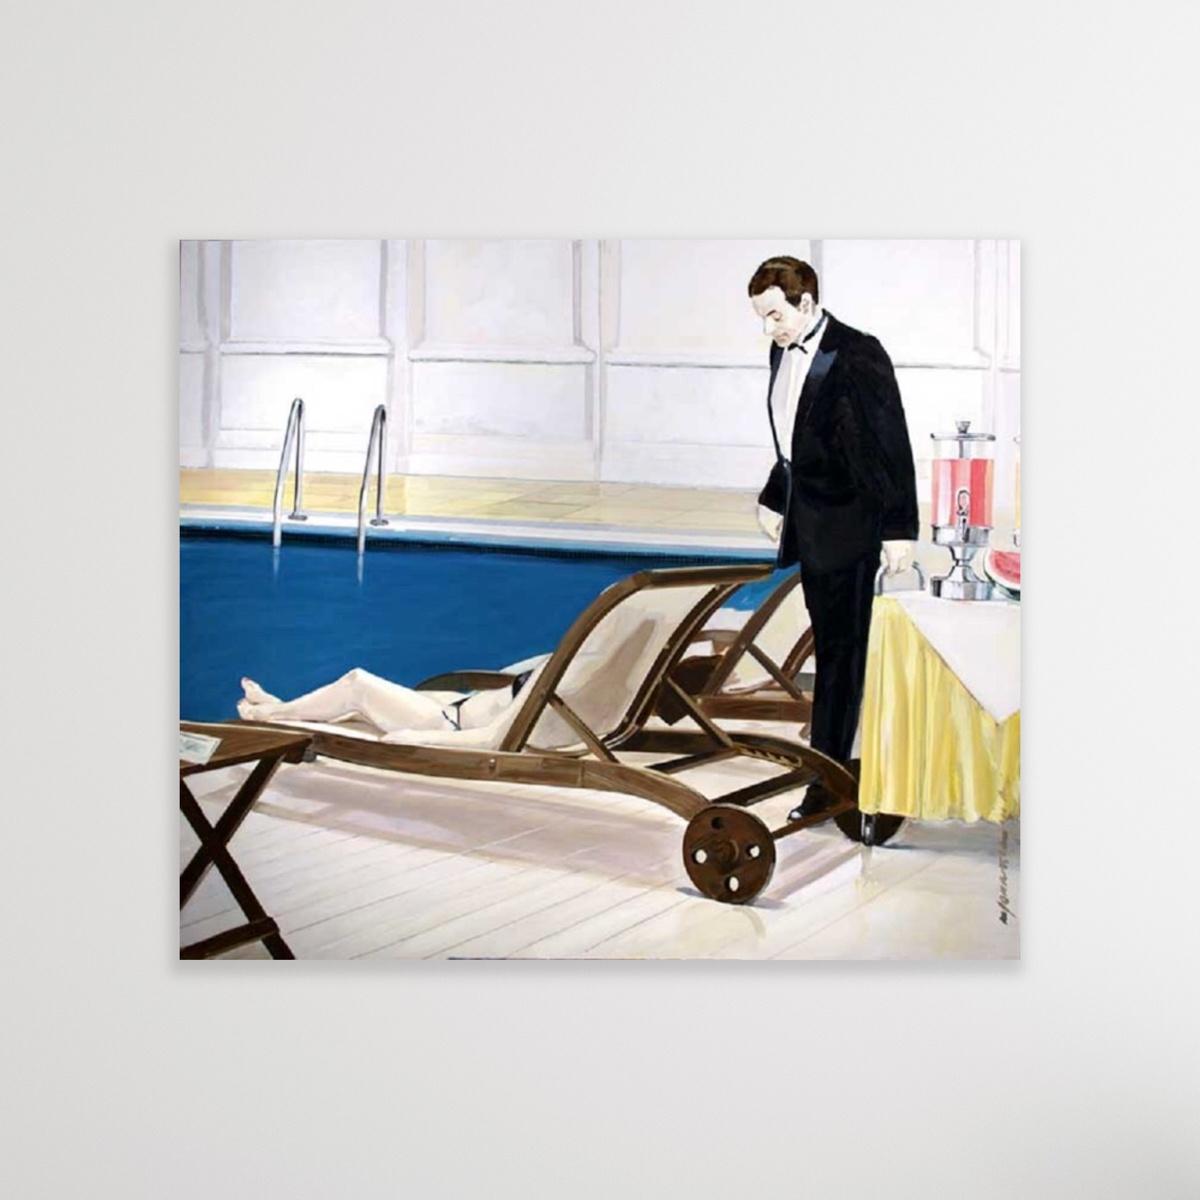 Swimming pool - Oil on canvas, Figurative realist painting, Polish art - Painting by Marek Okrassa